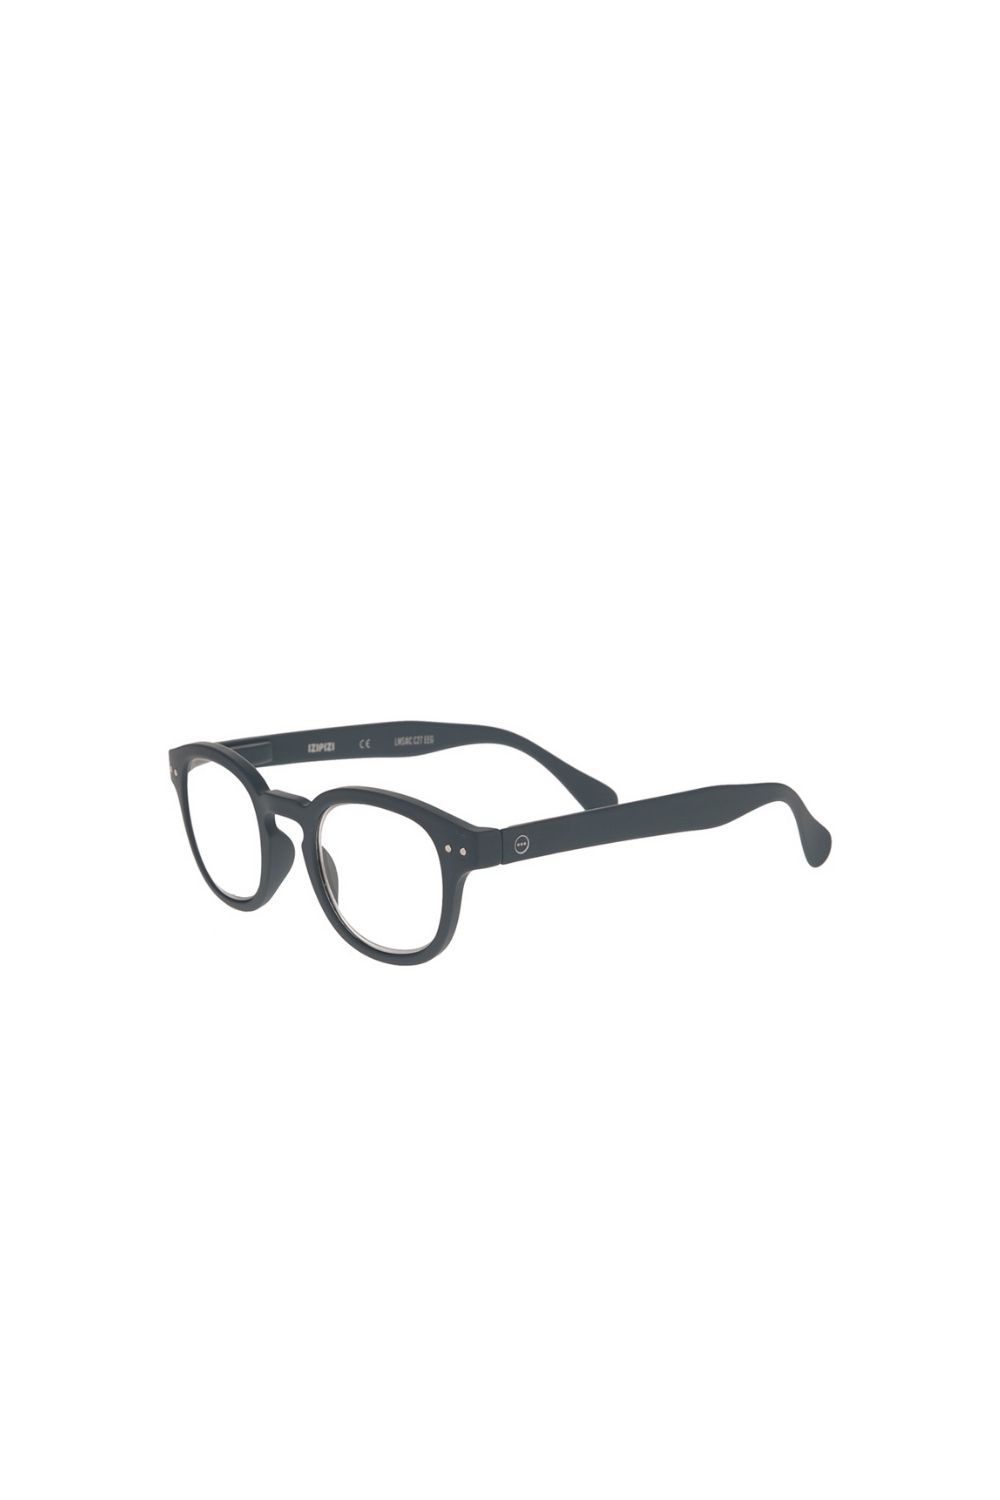 IZIPIZI - Unisex γυαλιά οράσεως IZIPIZI READING #C γκρι Γυναικεία/Αξεσουάρ/Γυαλιά/Οράσεως